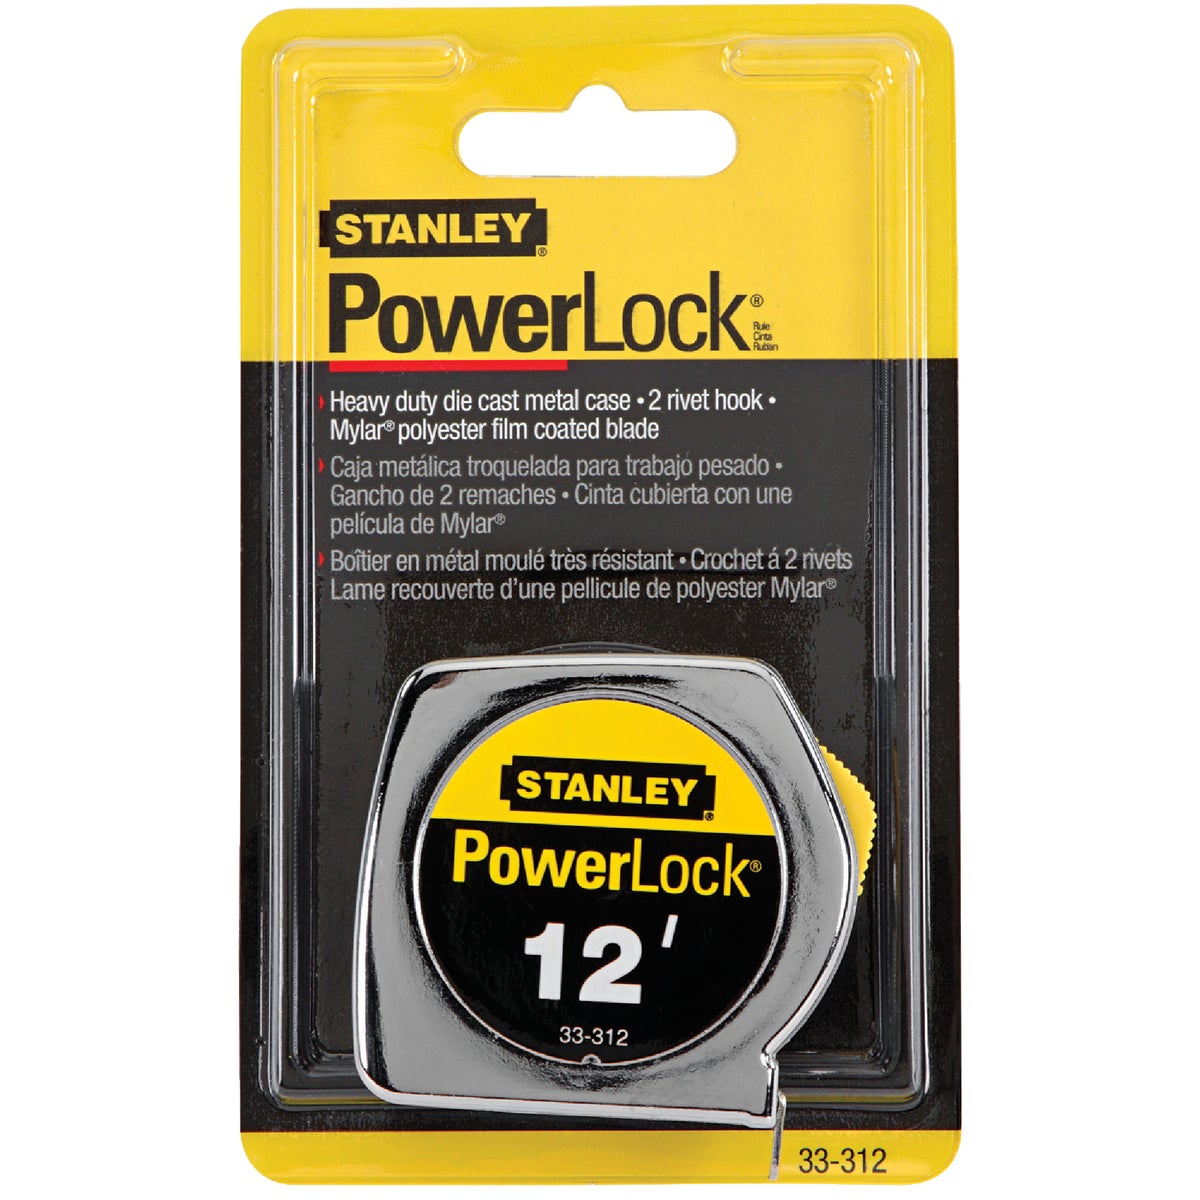 Stanley PowerLock 12 Ft. x 3/4 In. Tape Measure